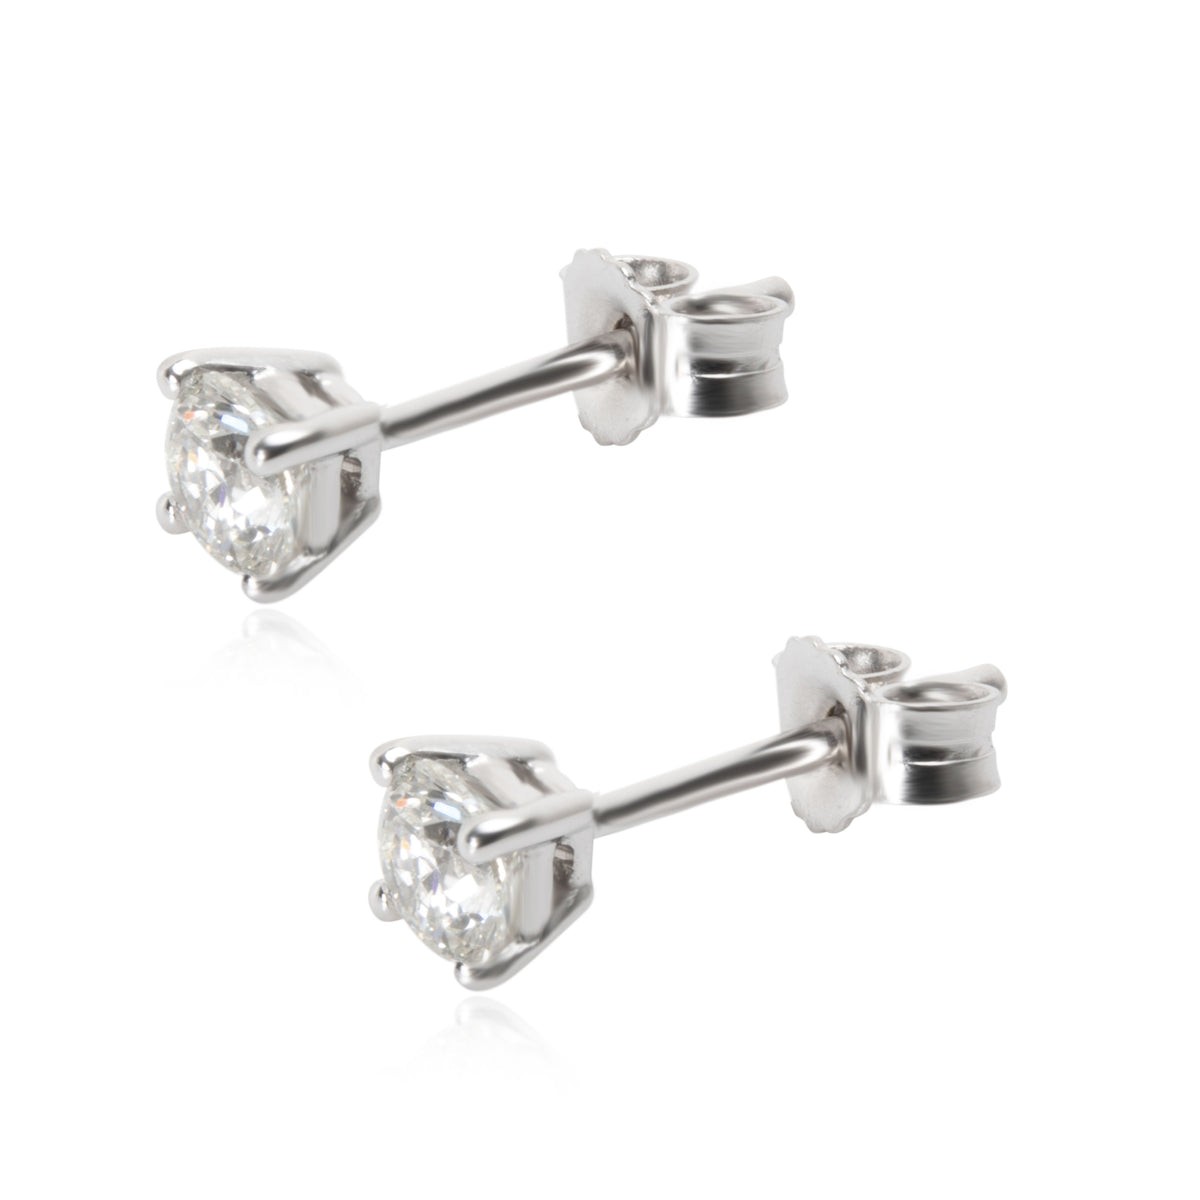 Round Cut Diamond Stud Earrings in 18K White Gold 0.50 CTW